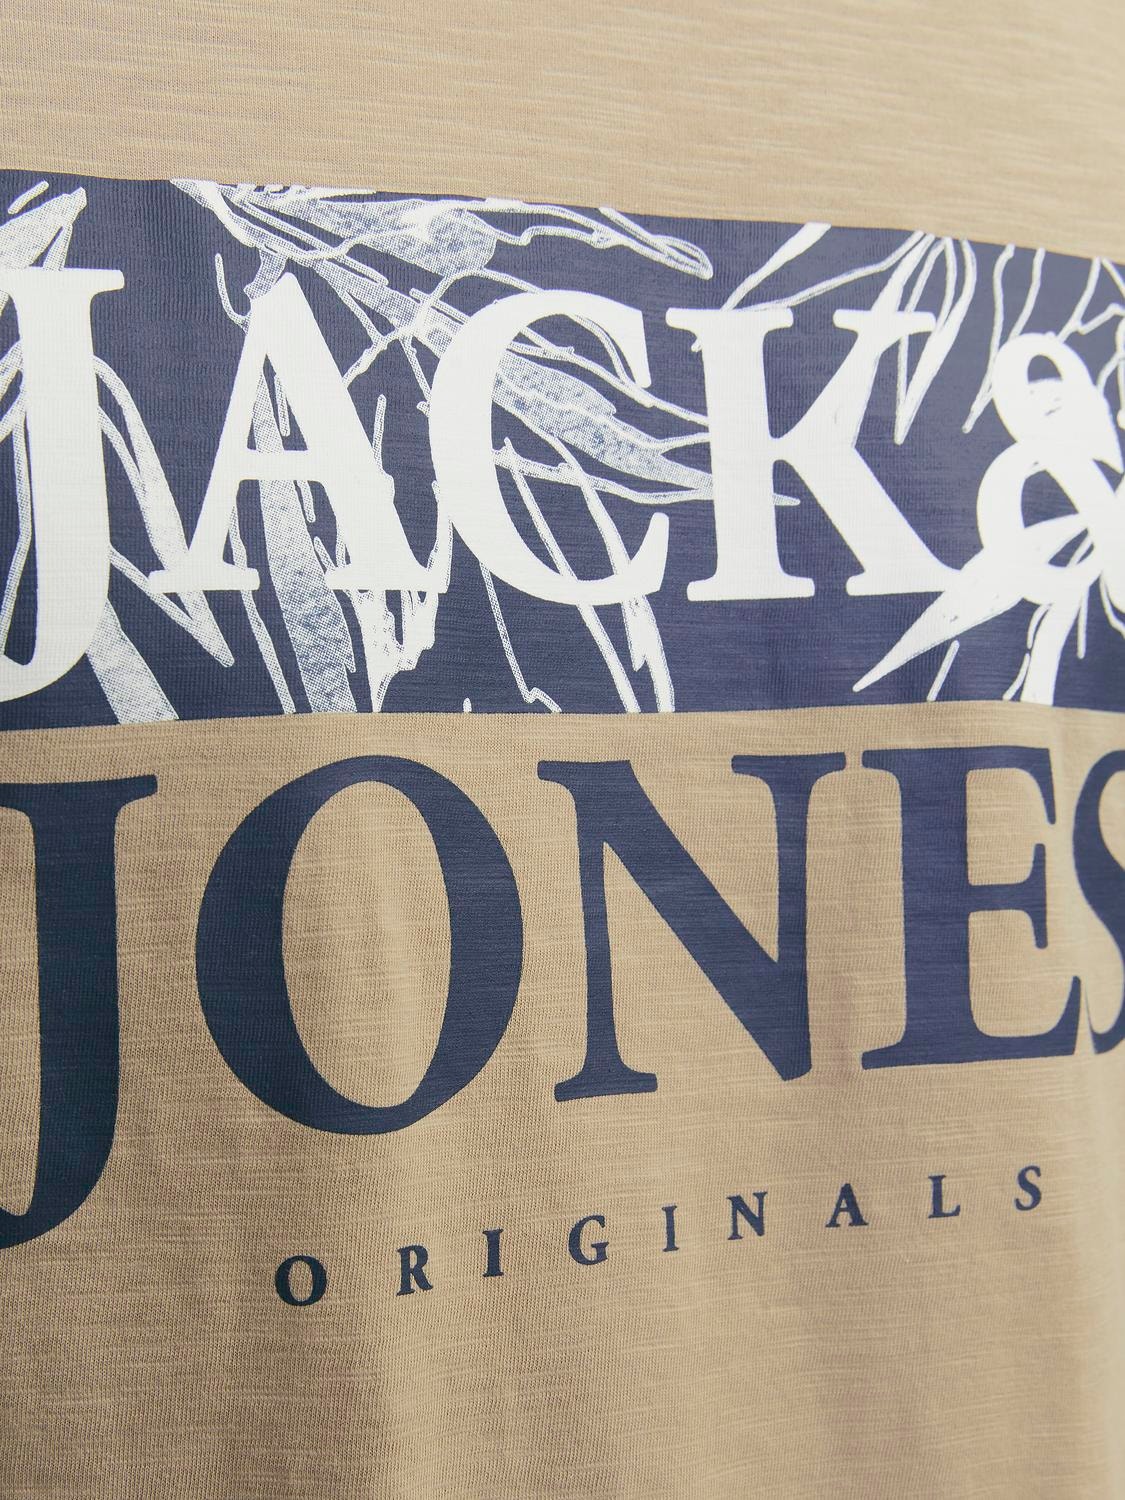 Jack & Jones T-shirt Imprimé Col rond -Crockery - 12255042